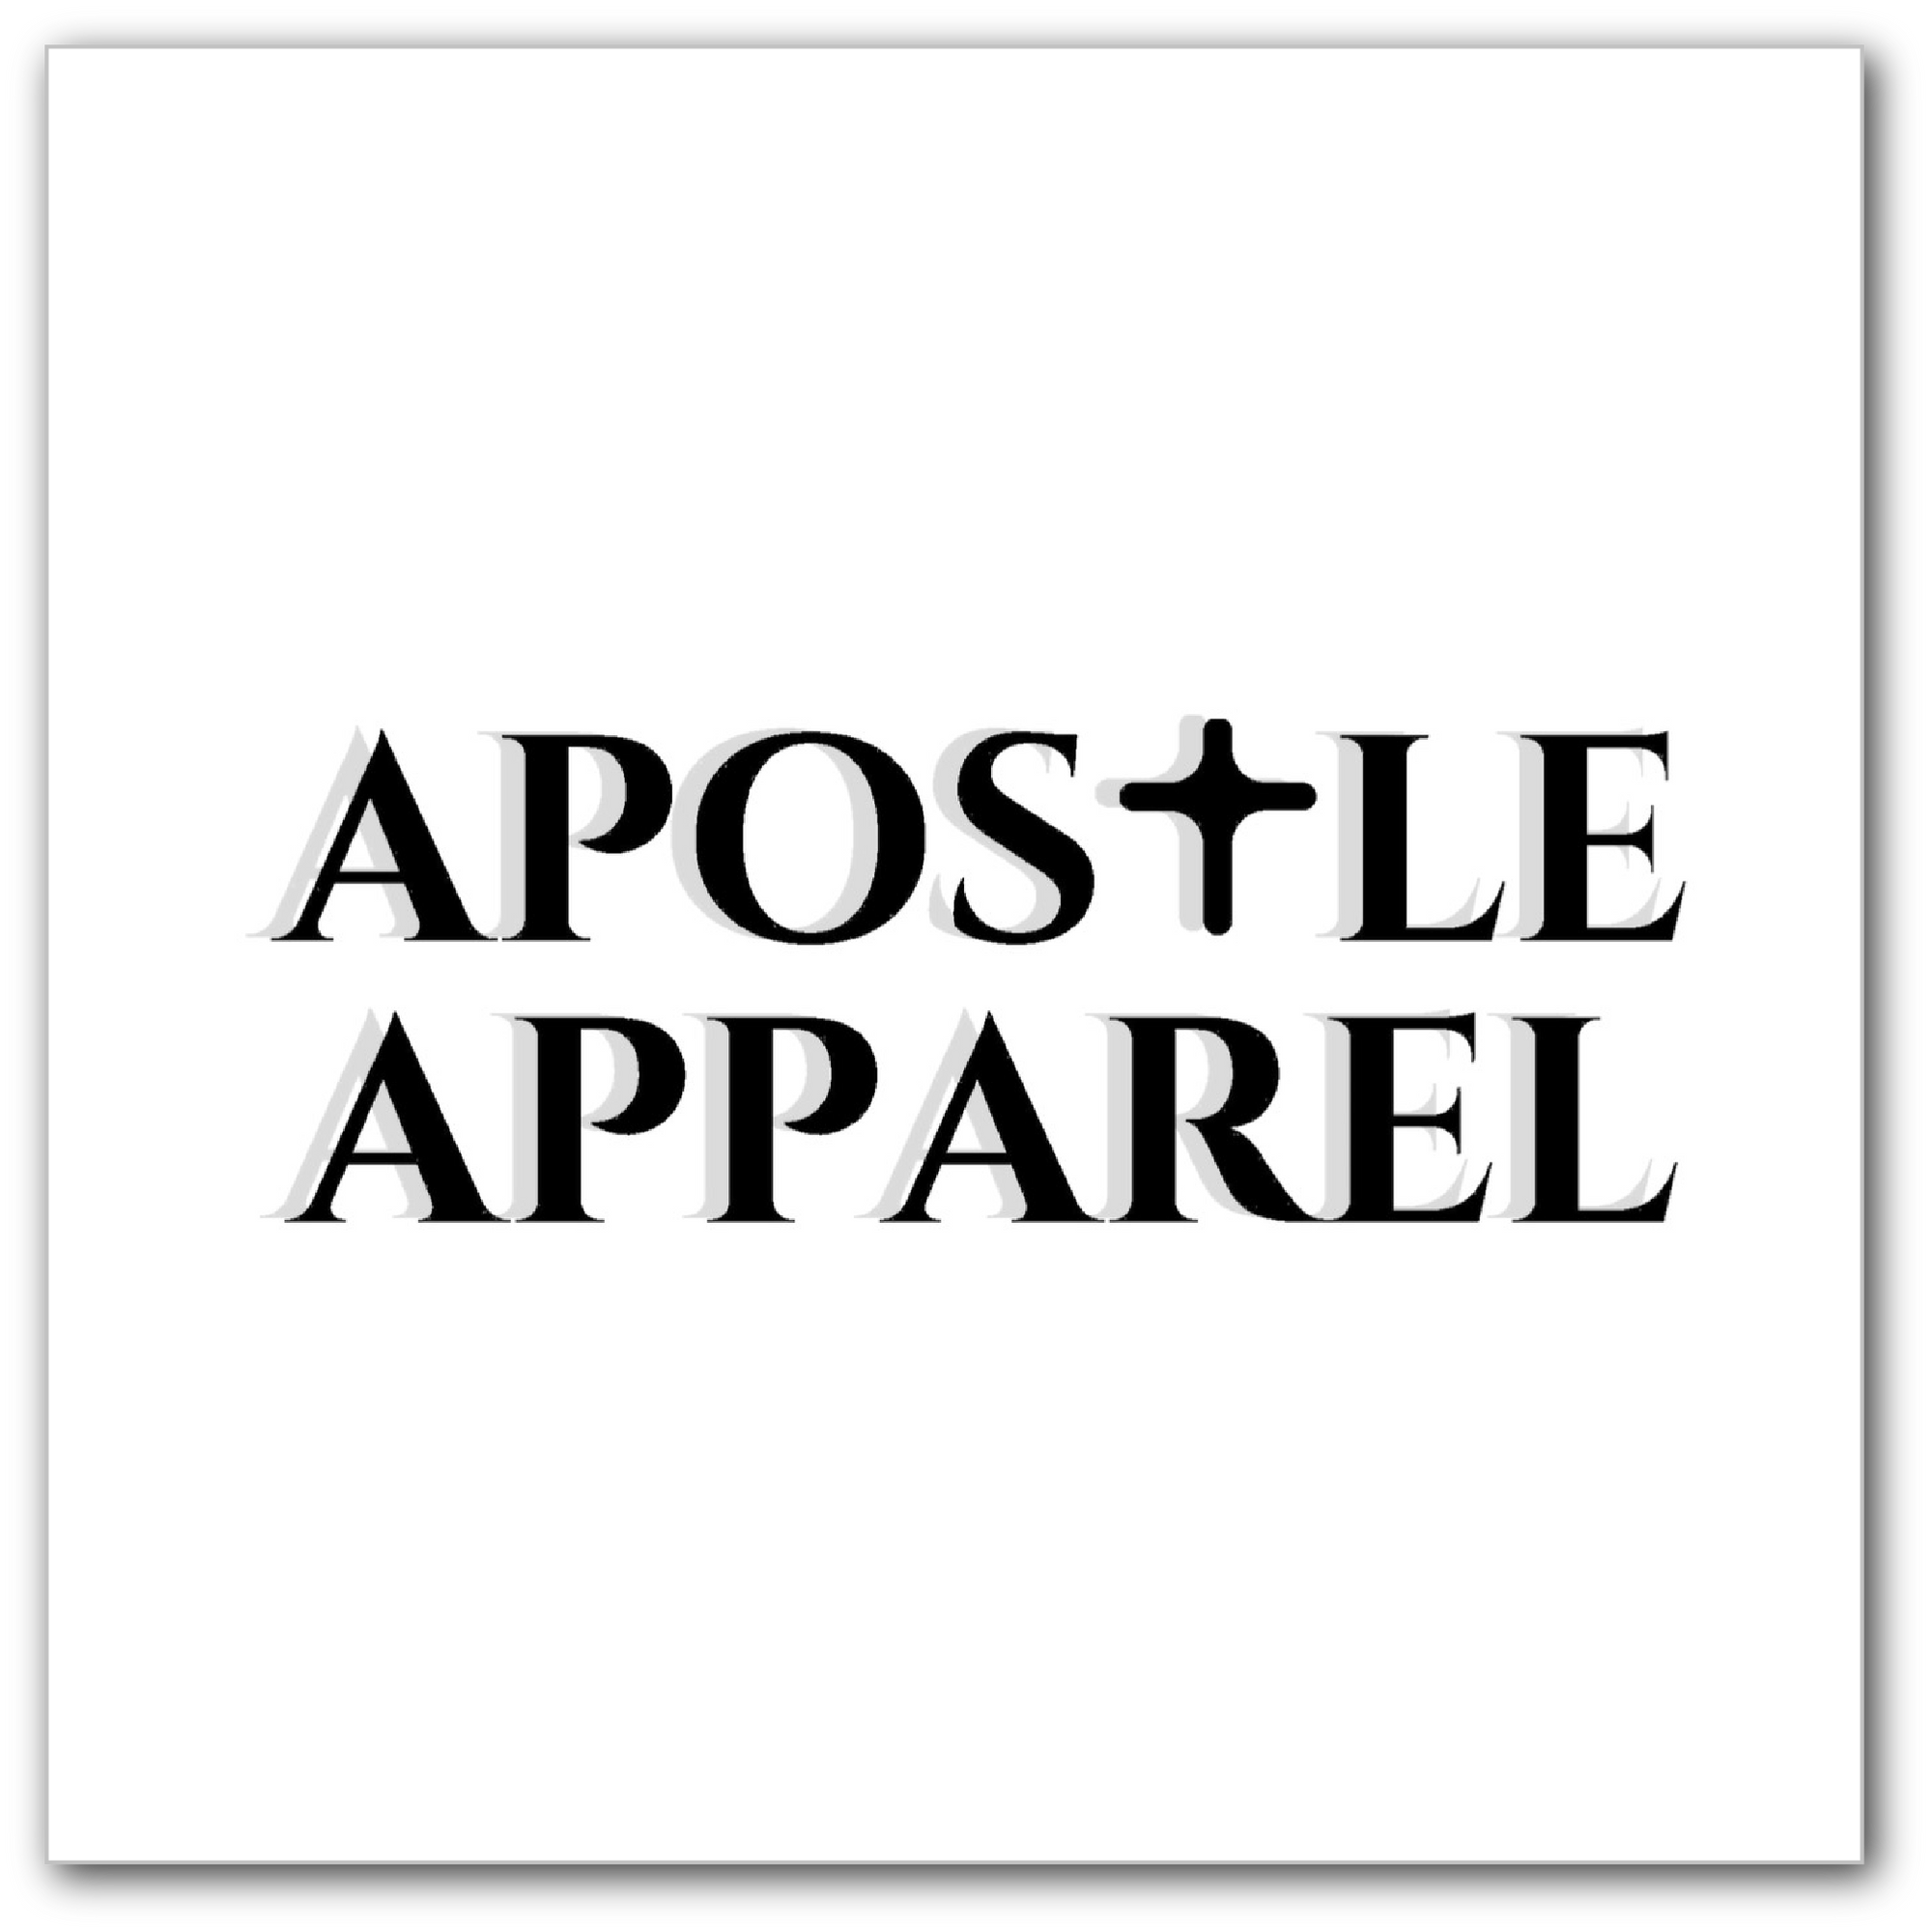 Apostle Apparel